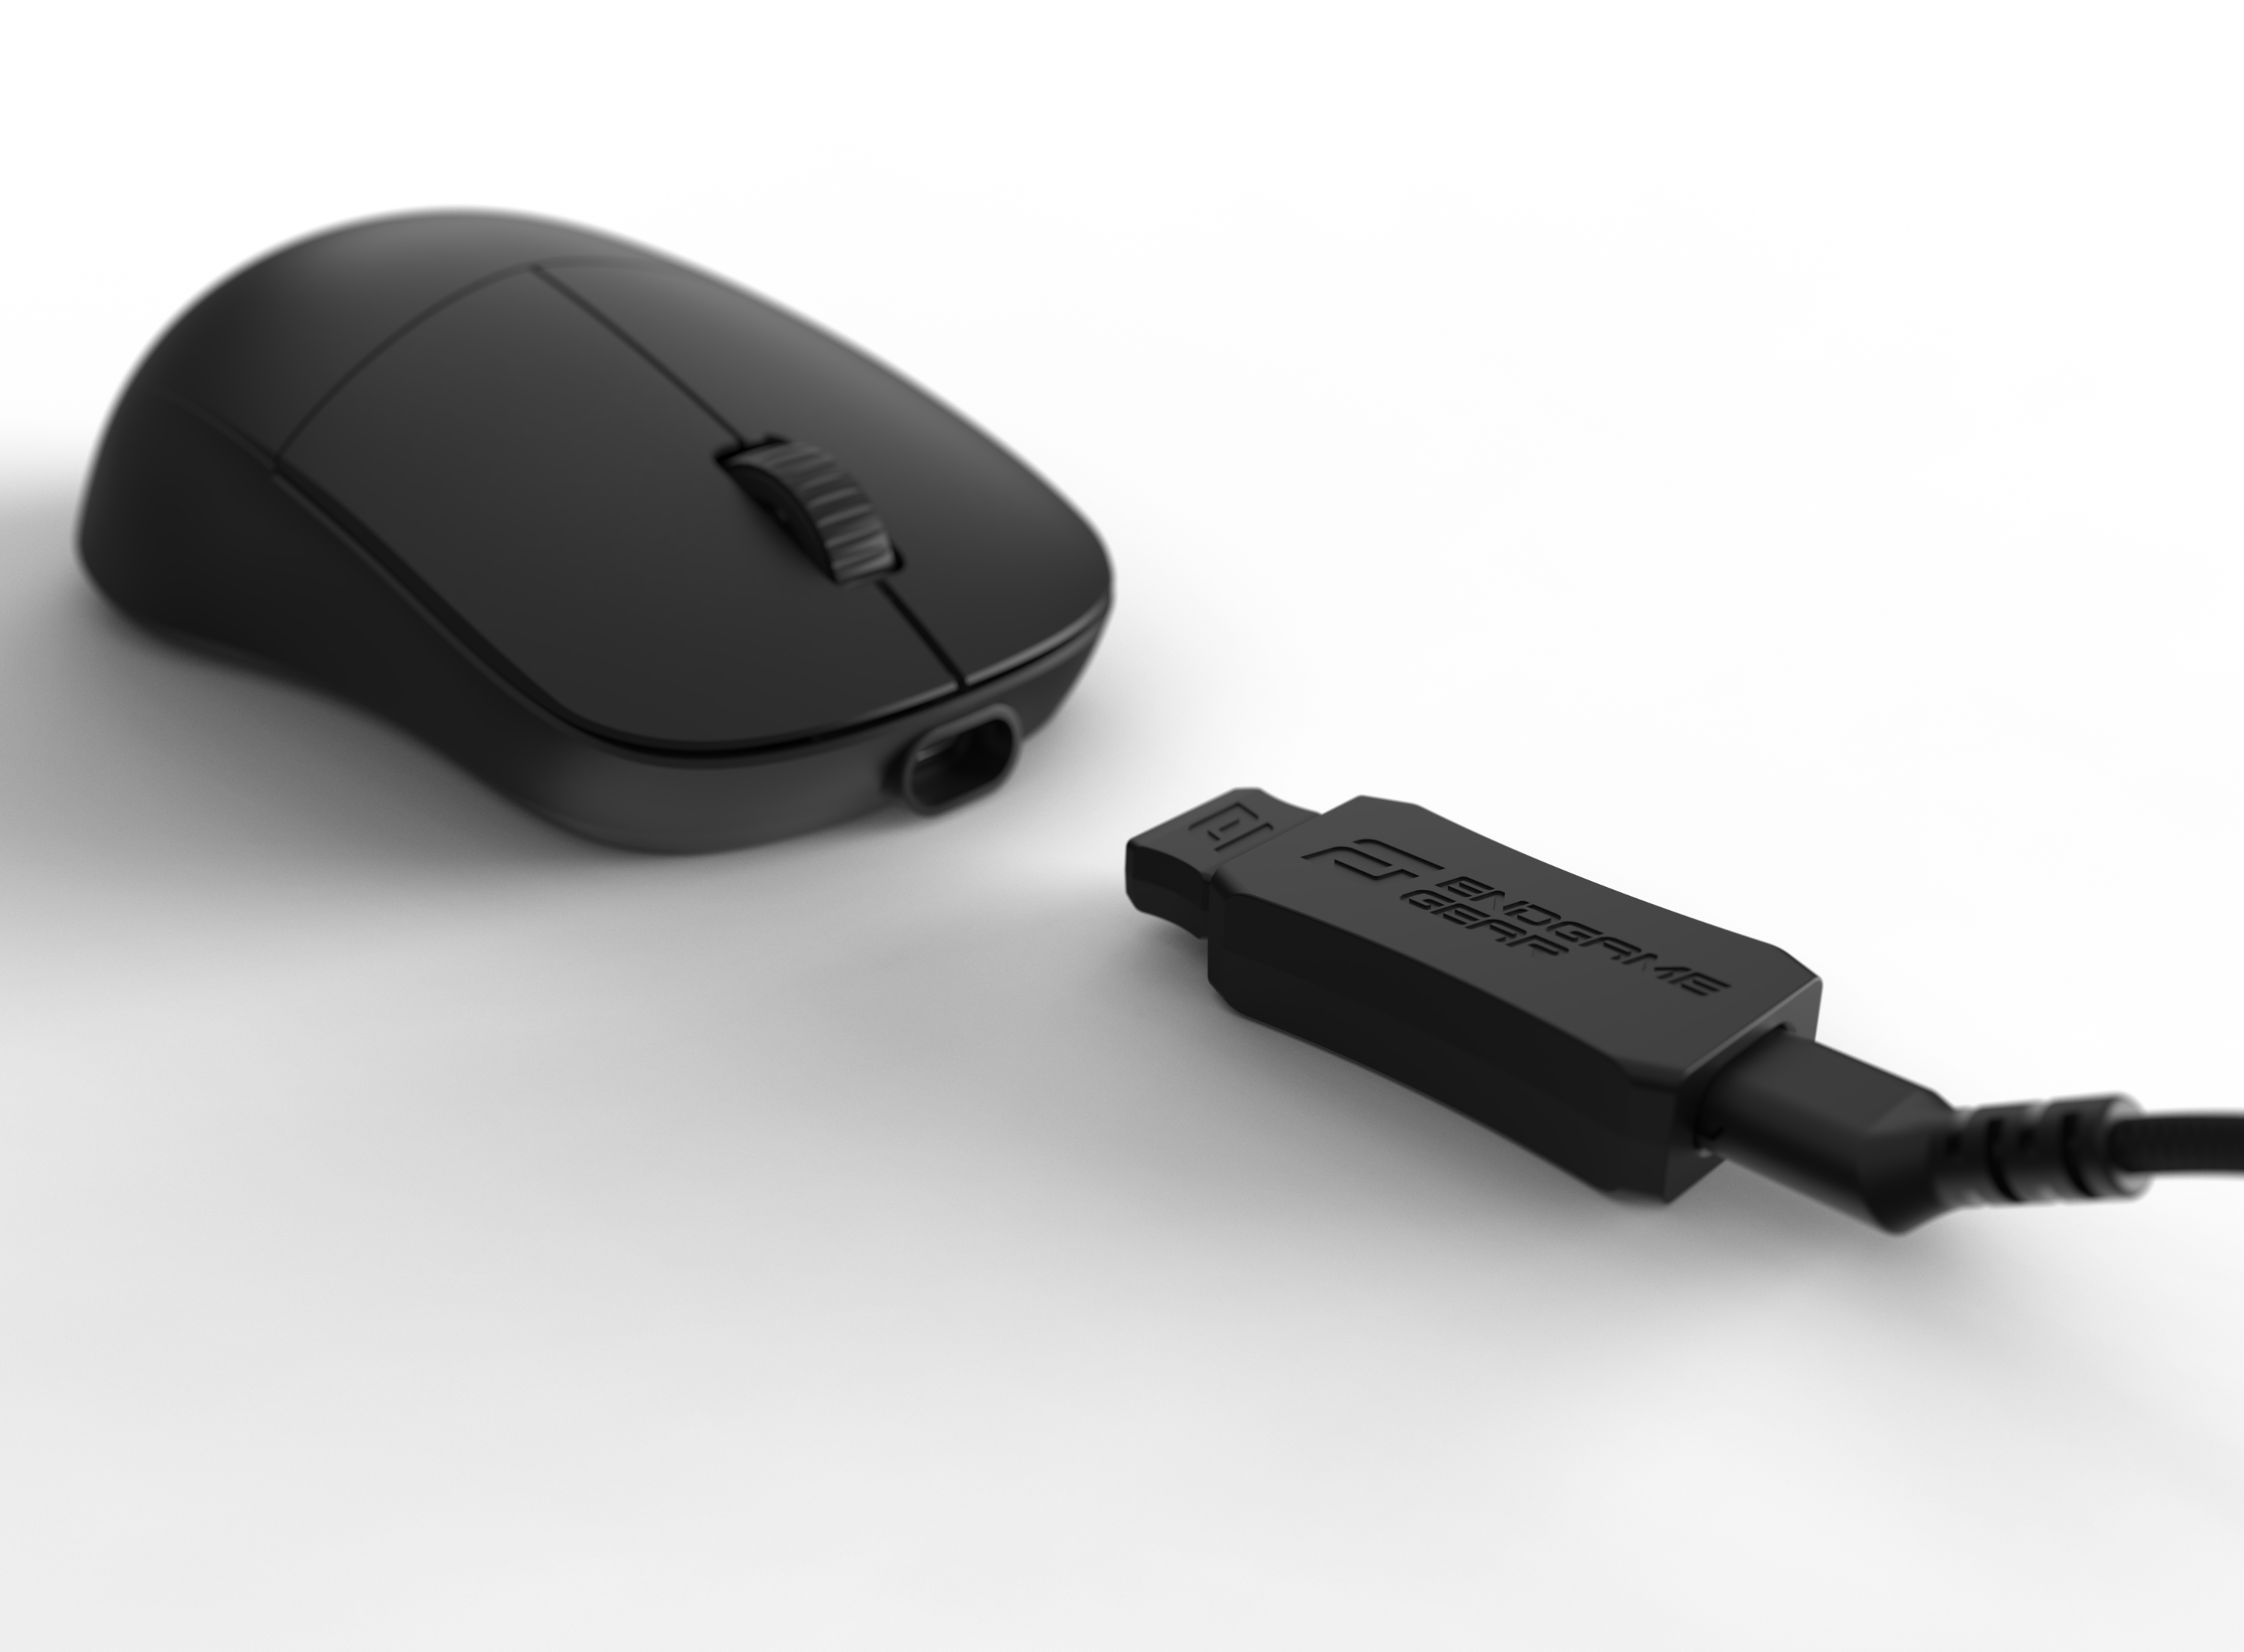 Endgame Gear XM2w Wireless Gaming mouse - Sort Endgame